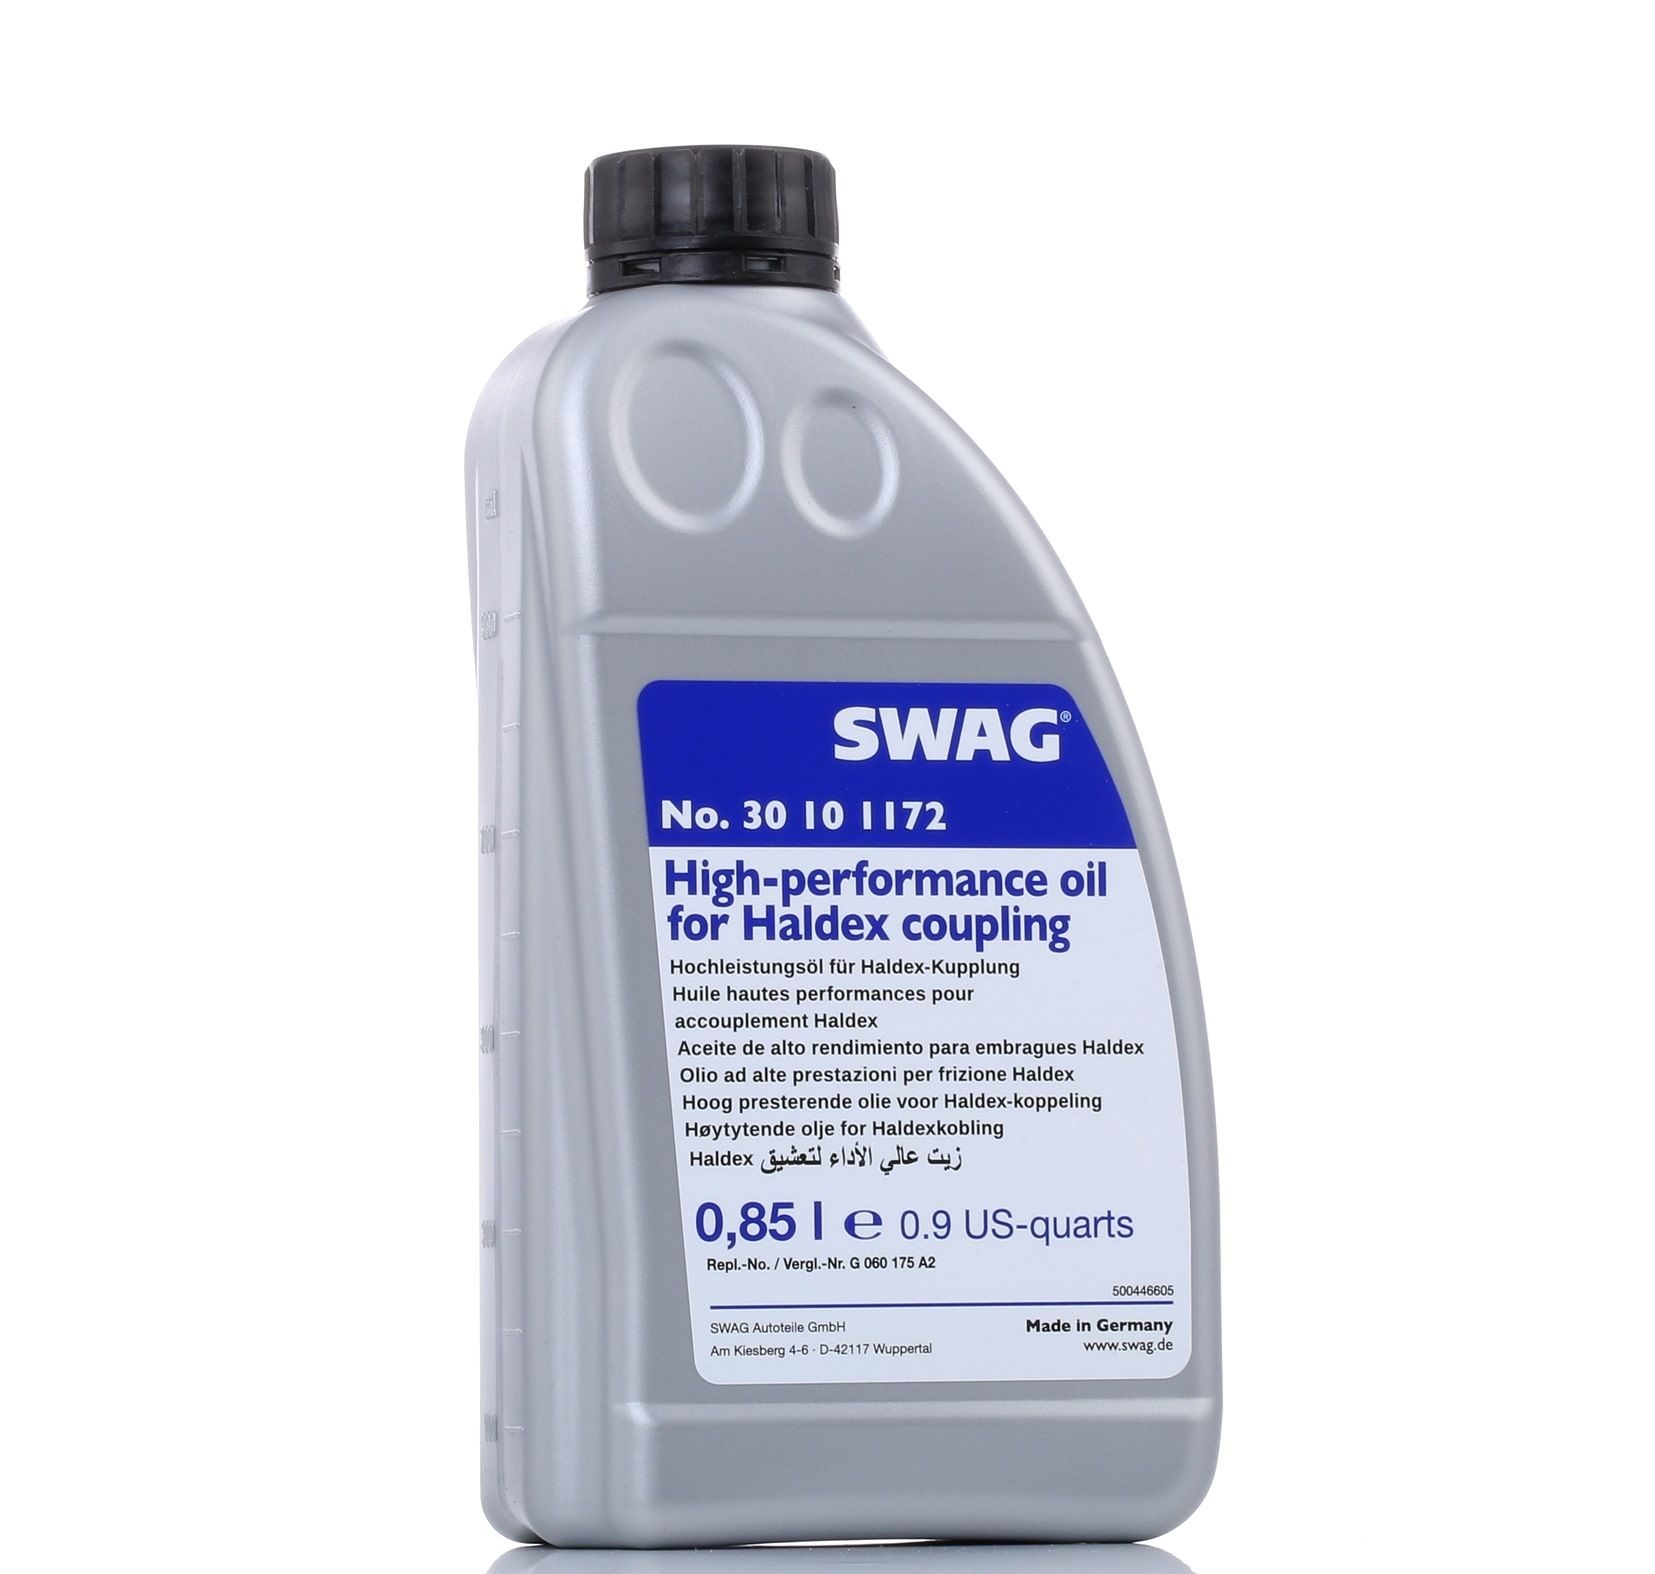 SWAG 30101172 Hydraulic Filter, Haldex coupling G 060 175 A2